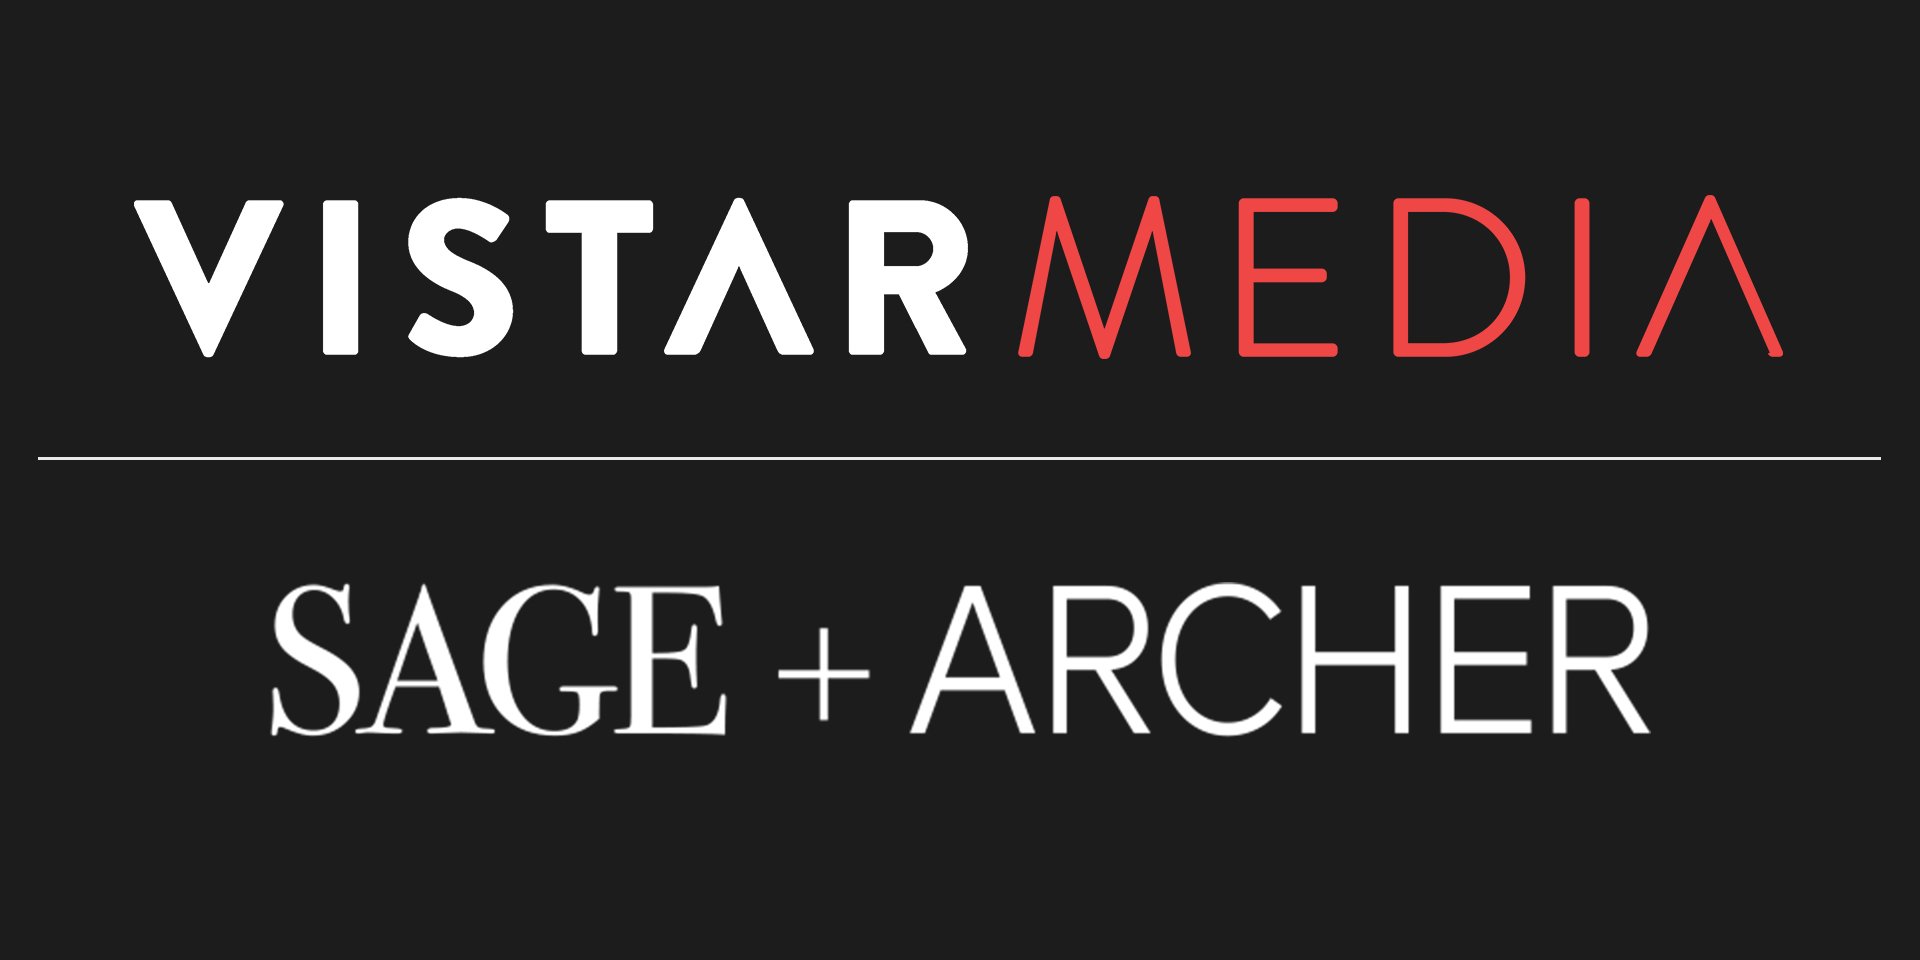 Vistar Media and Sage and Archer Logos